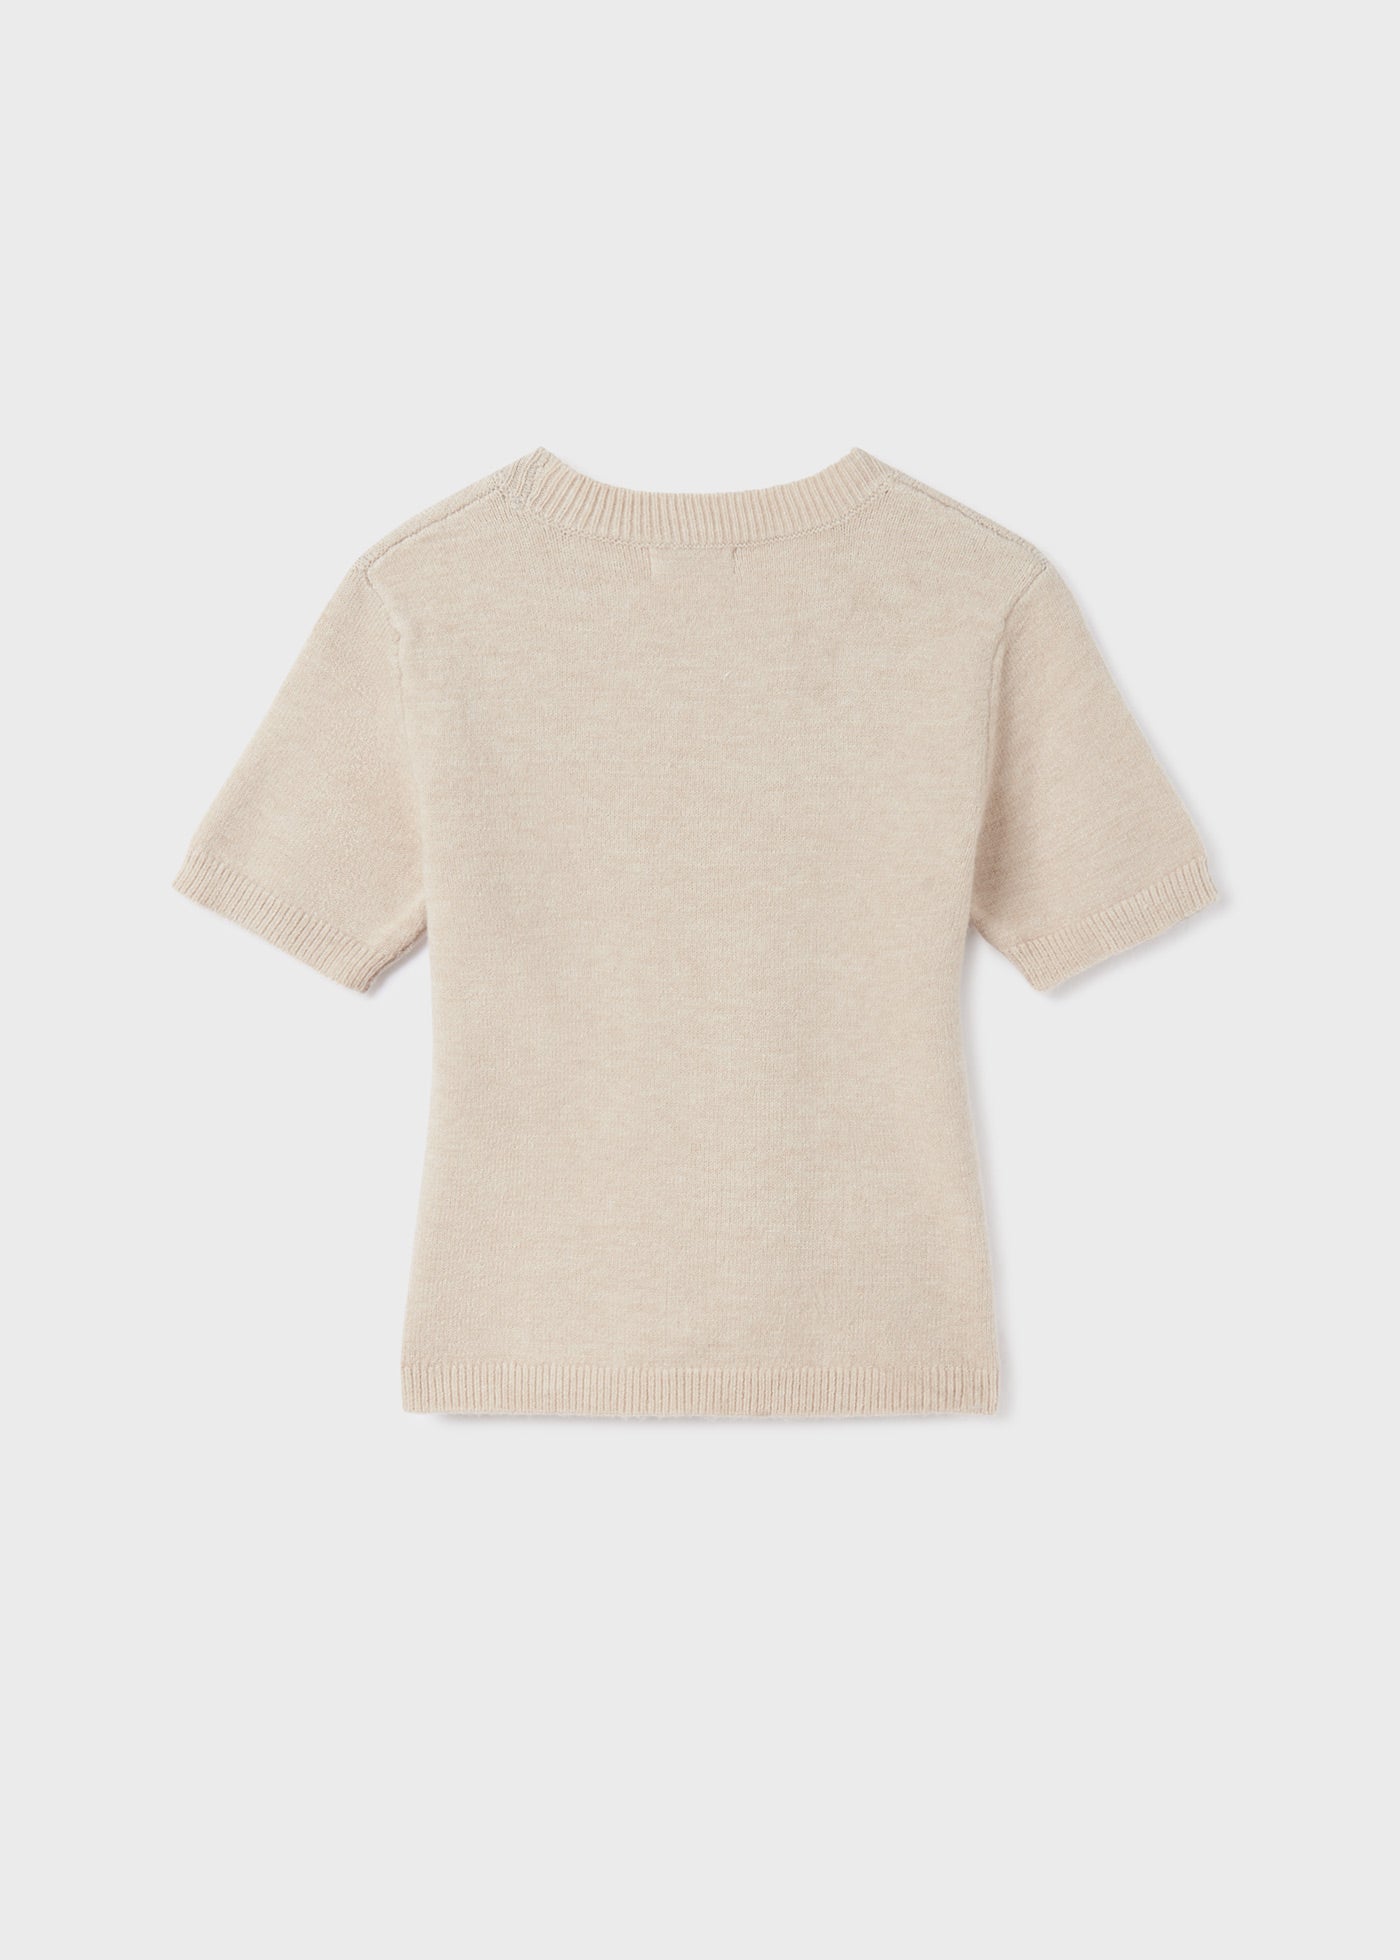 Rebeccas Shirt & Cardigan Set- Sand